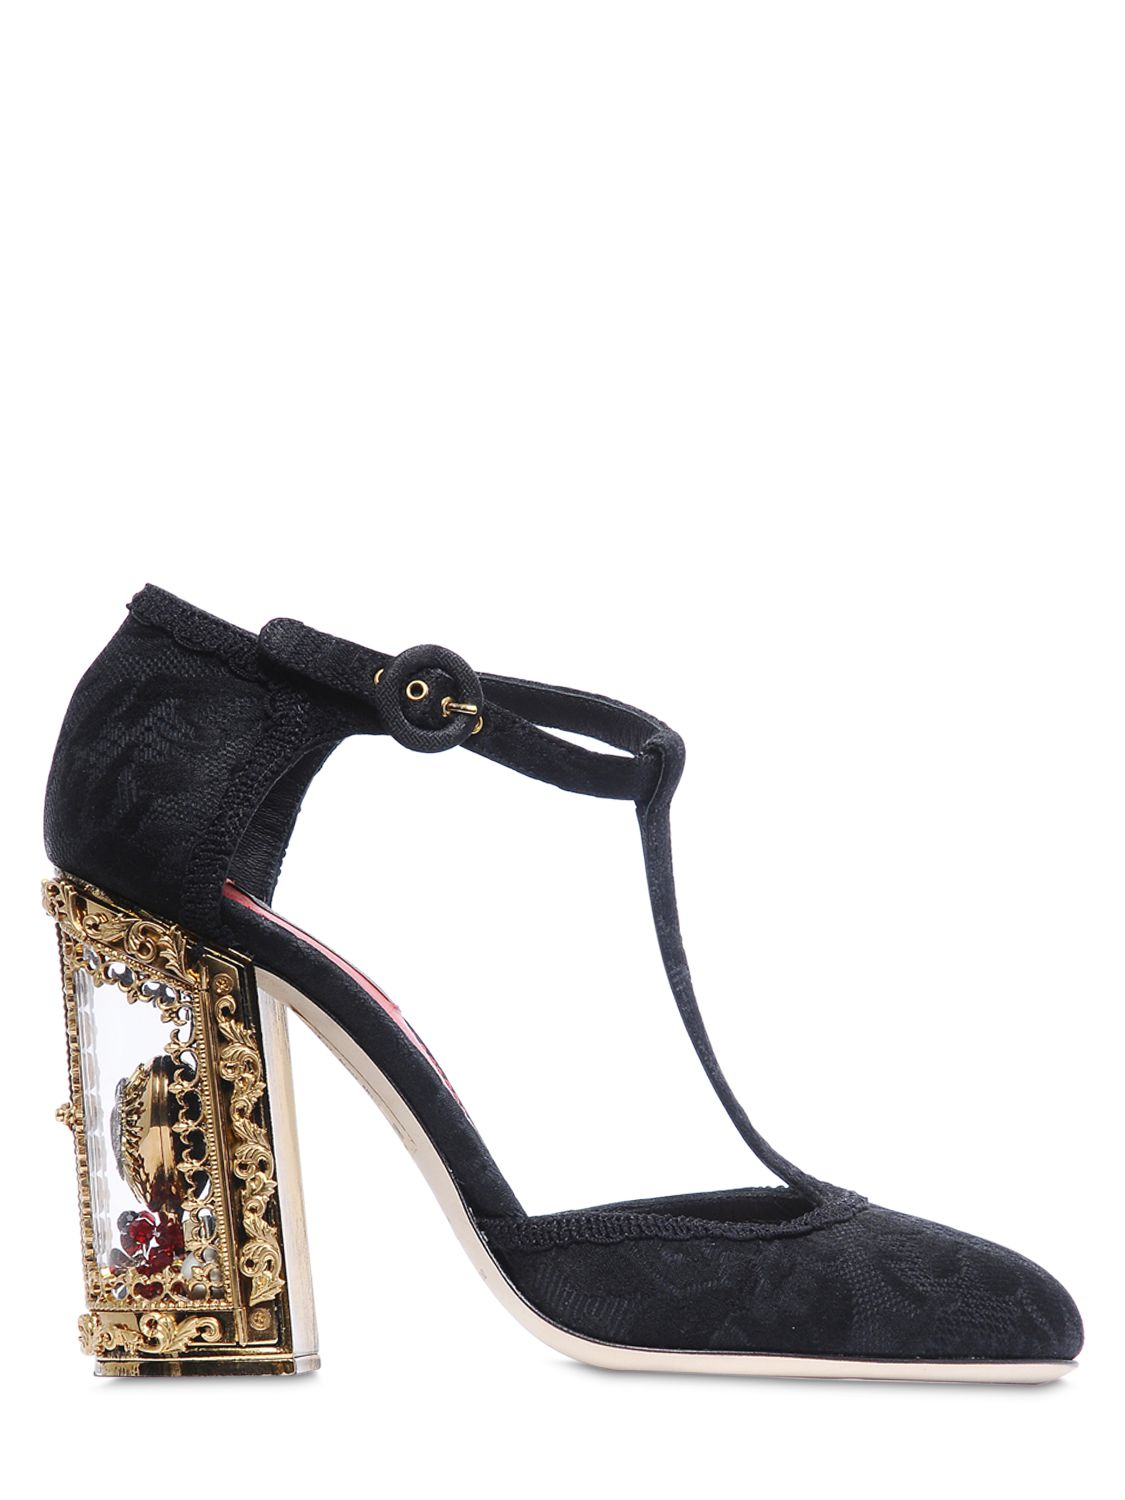 Dolce & Gabbana 105Mm Sacred Heart Brocade T-Strap Pumps in Black | Lyst